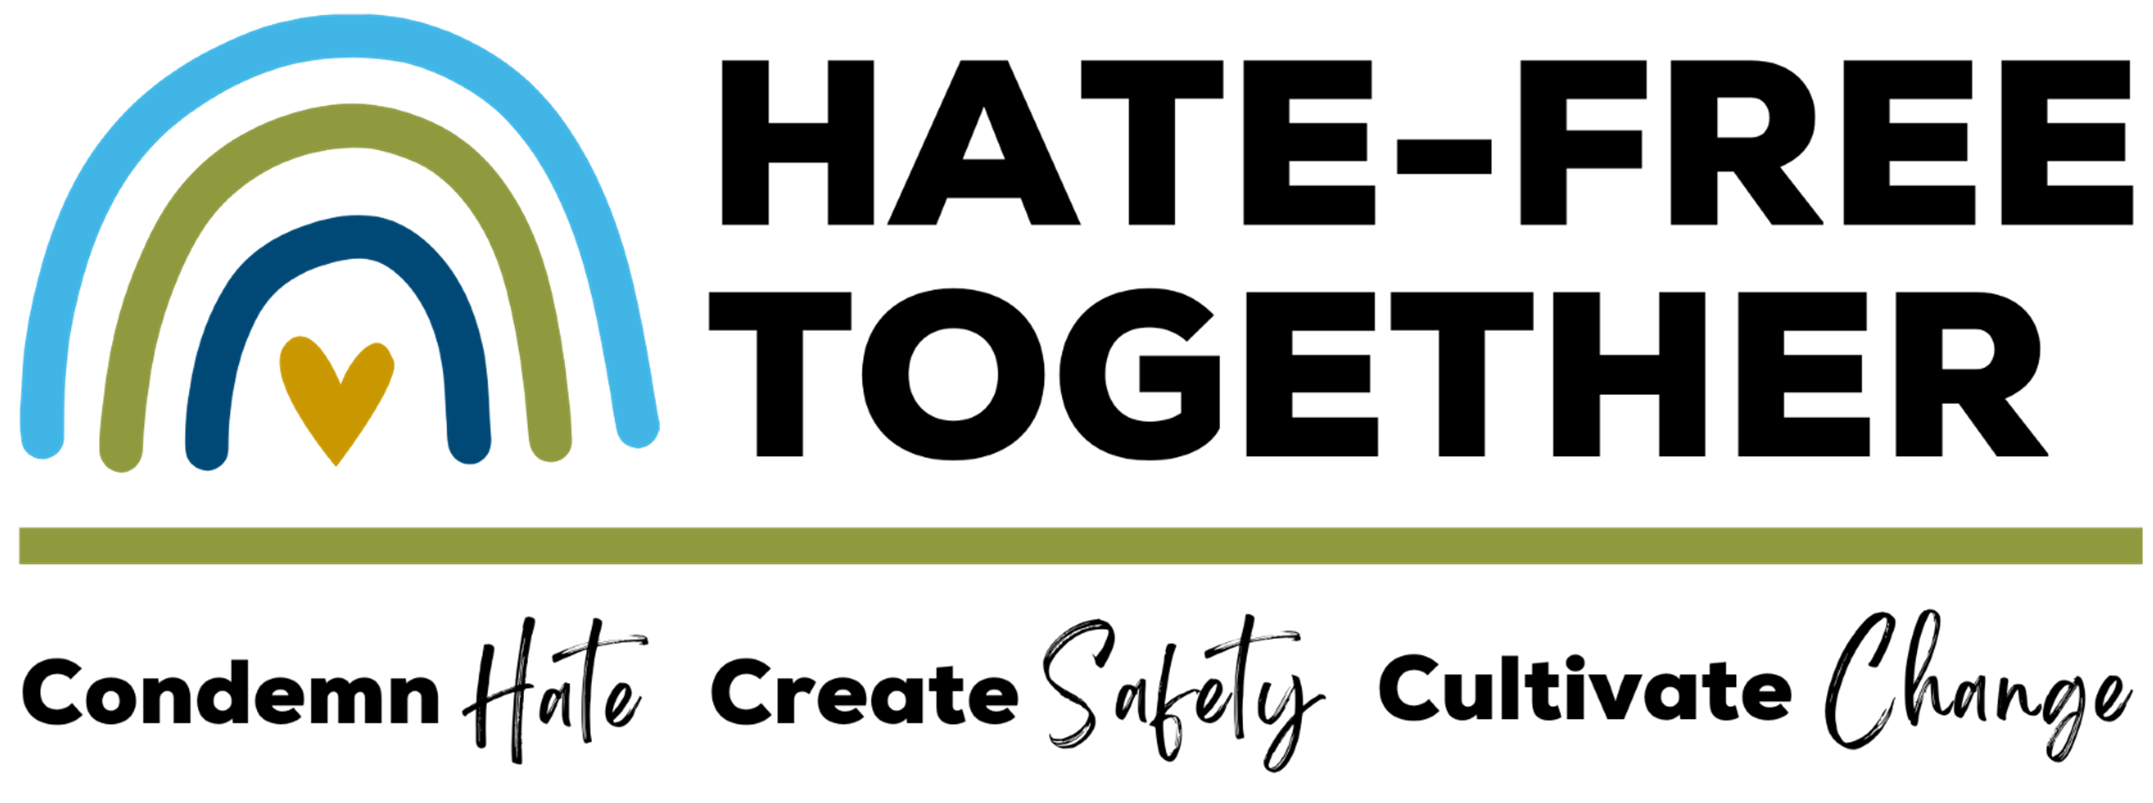 Hate-Free Together logo